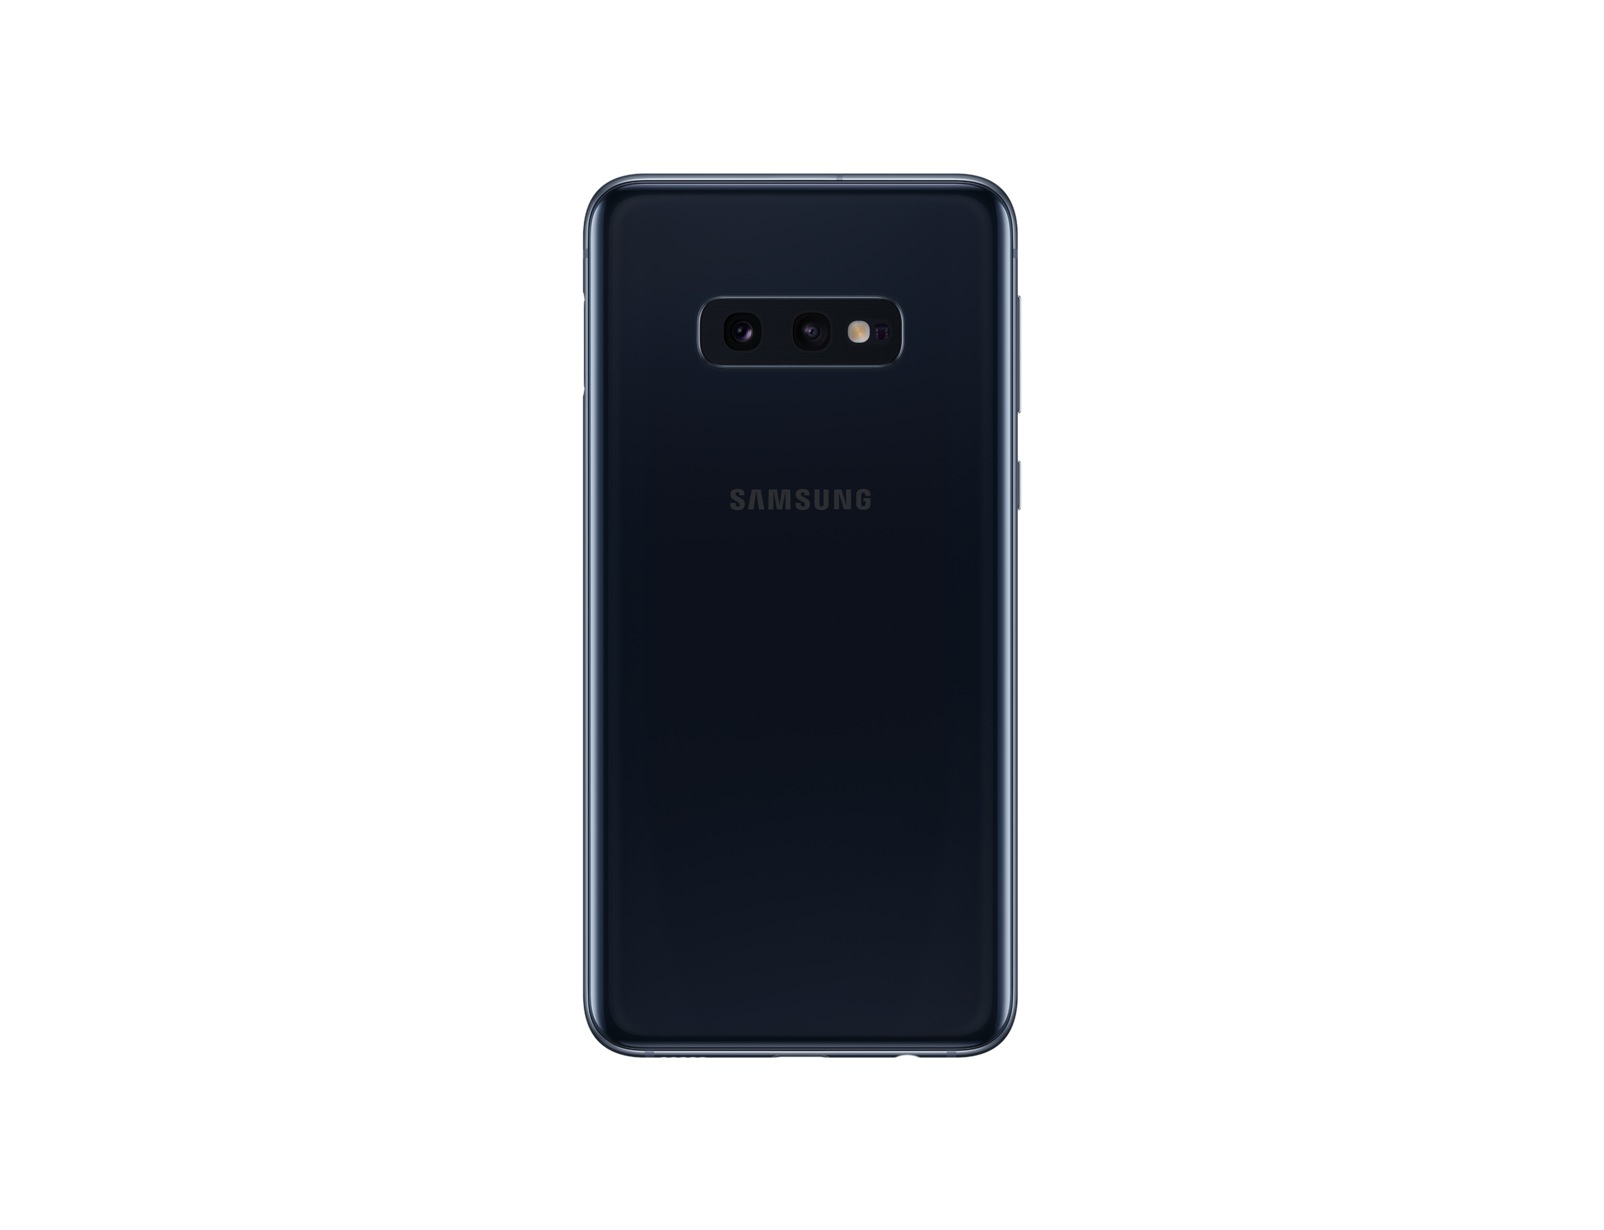 Samsung SM-G970F (Black)